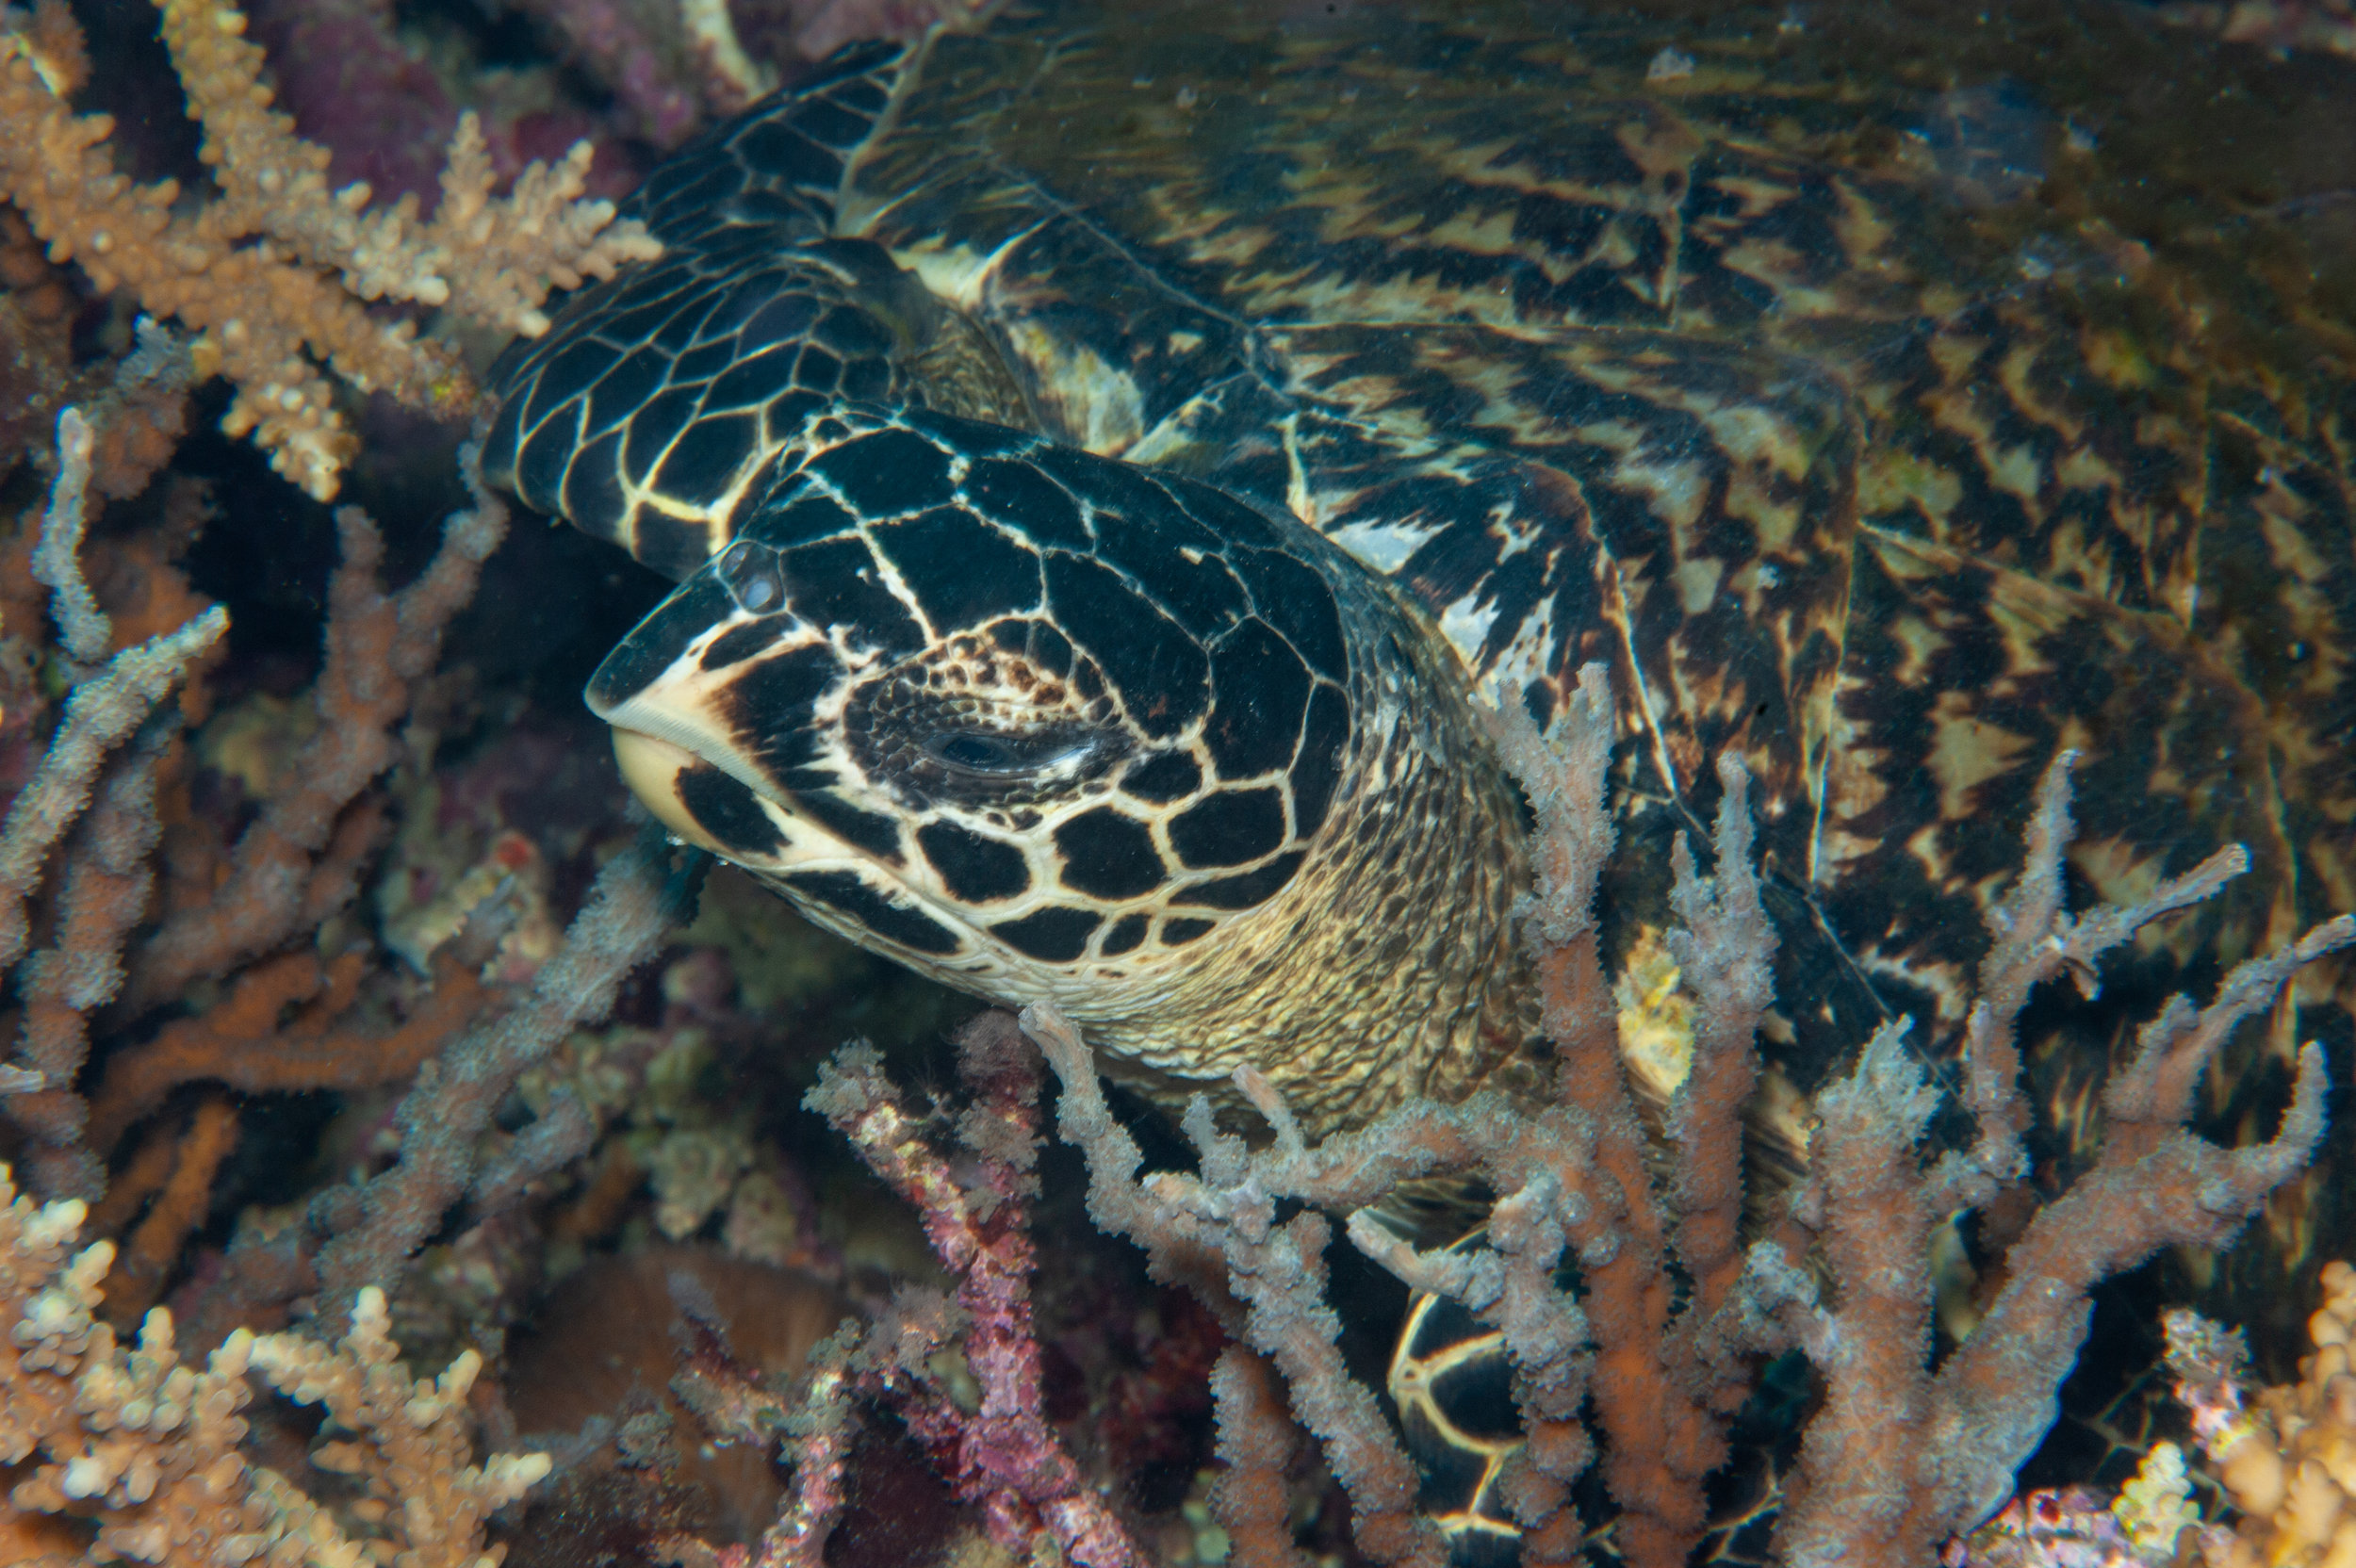 Hawksbill turtle - Eretmochelys imbricata, Midway Reef, Father's Reefs